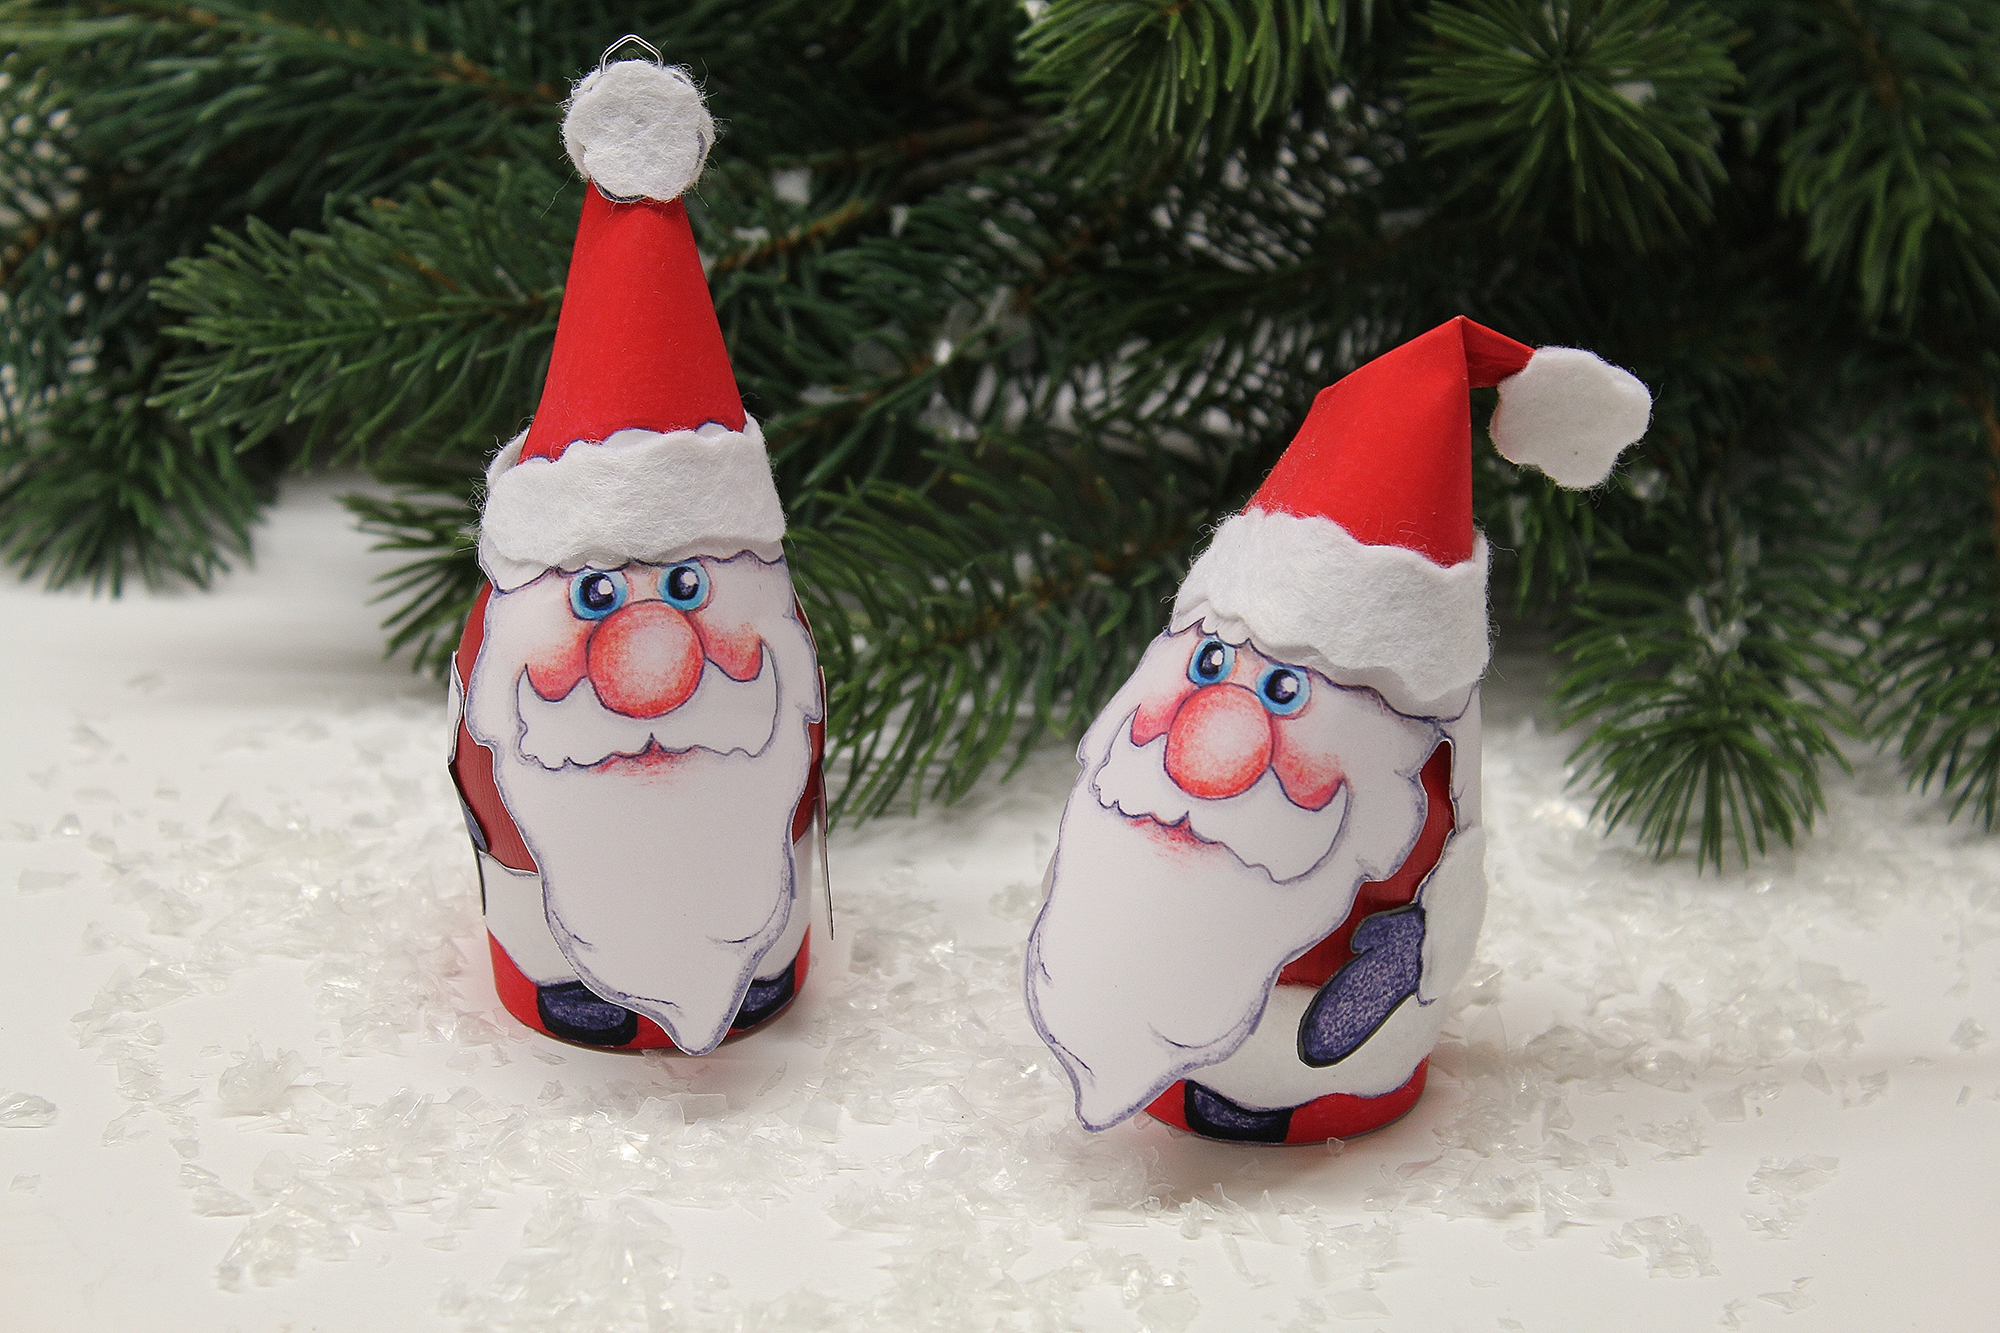 The GOP Debt Ceiling Play: Just “Two Santas” in Drag